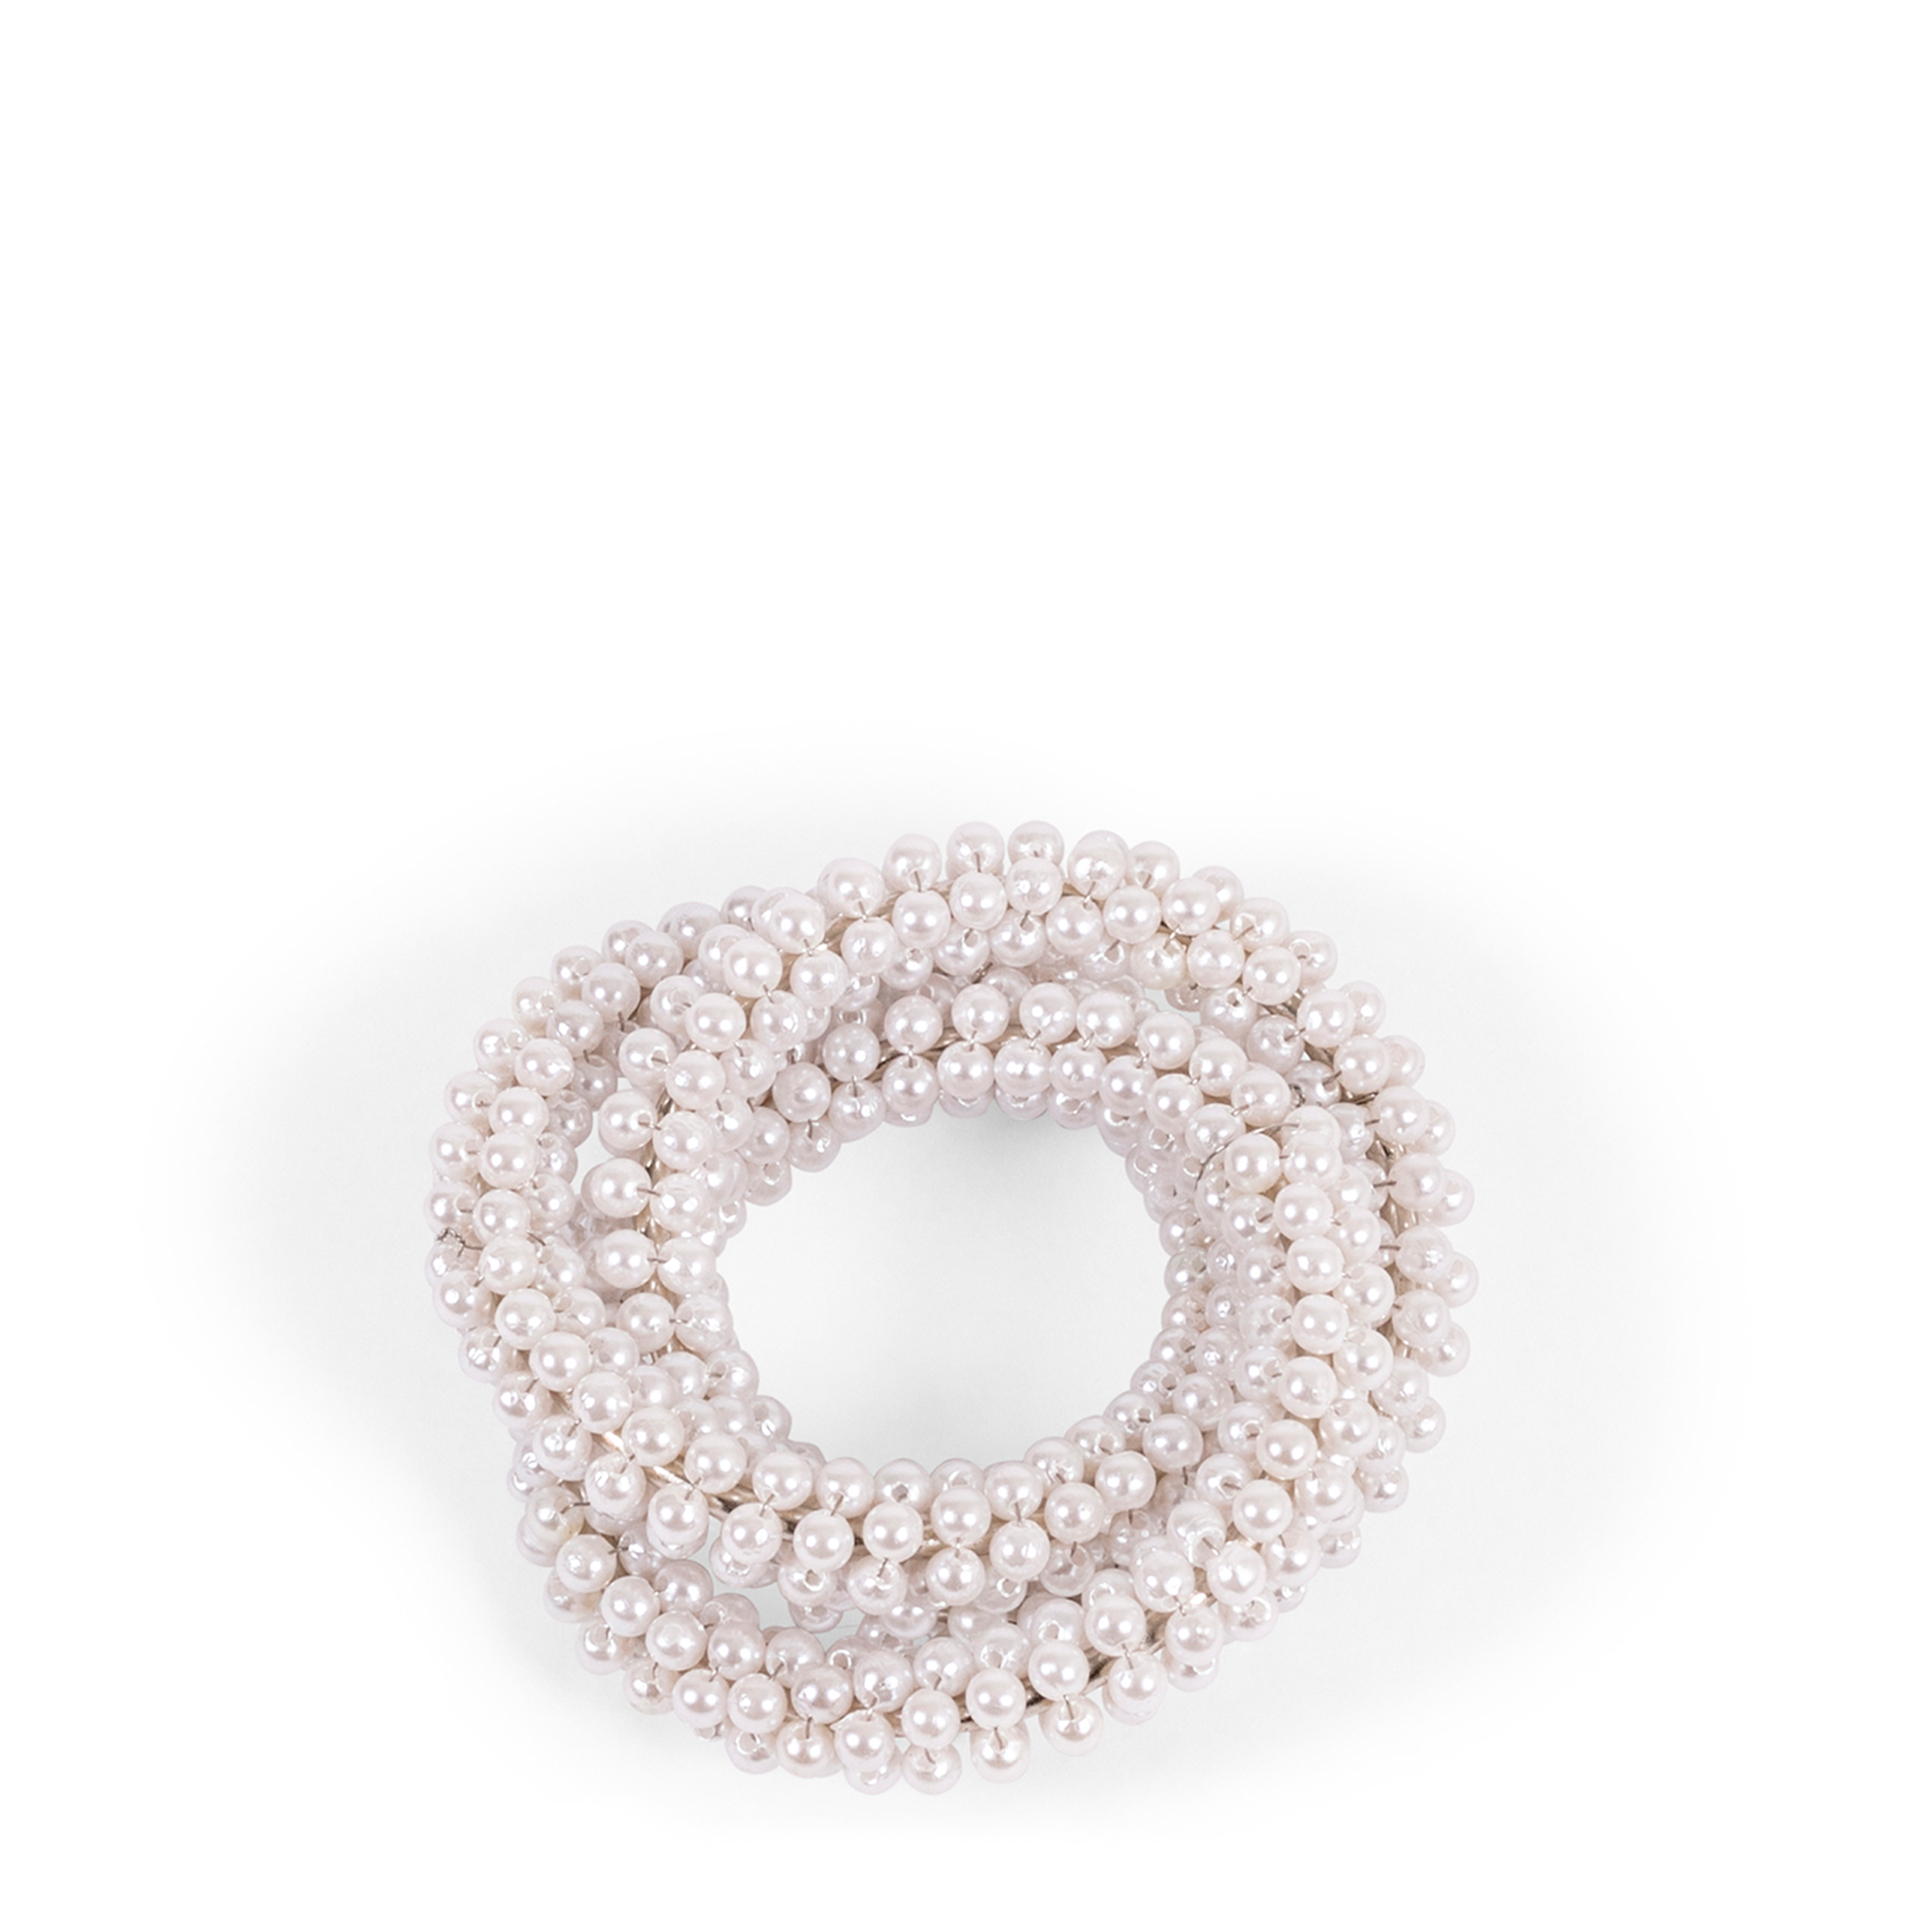 3 Ring Napkin Ring - Pearl